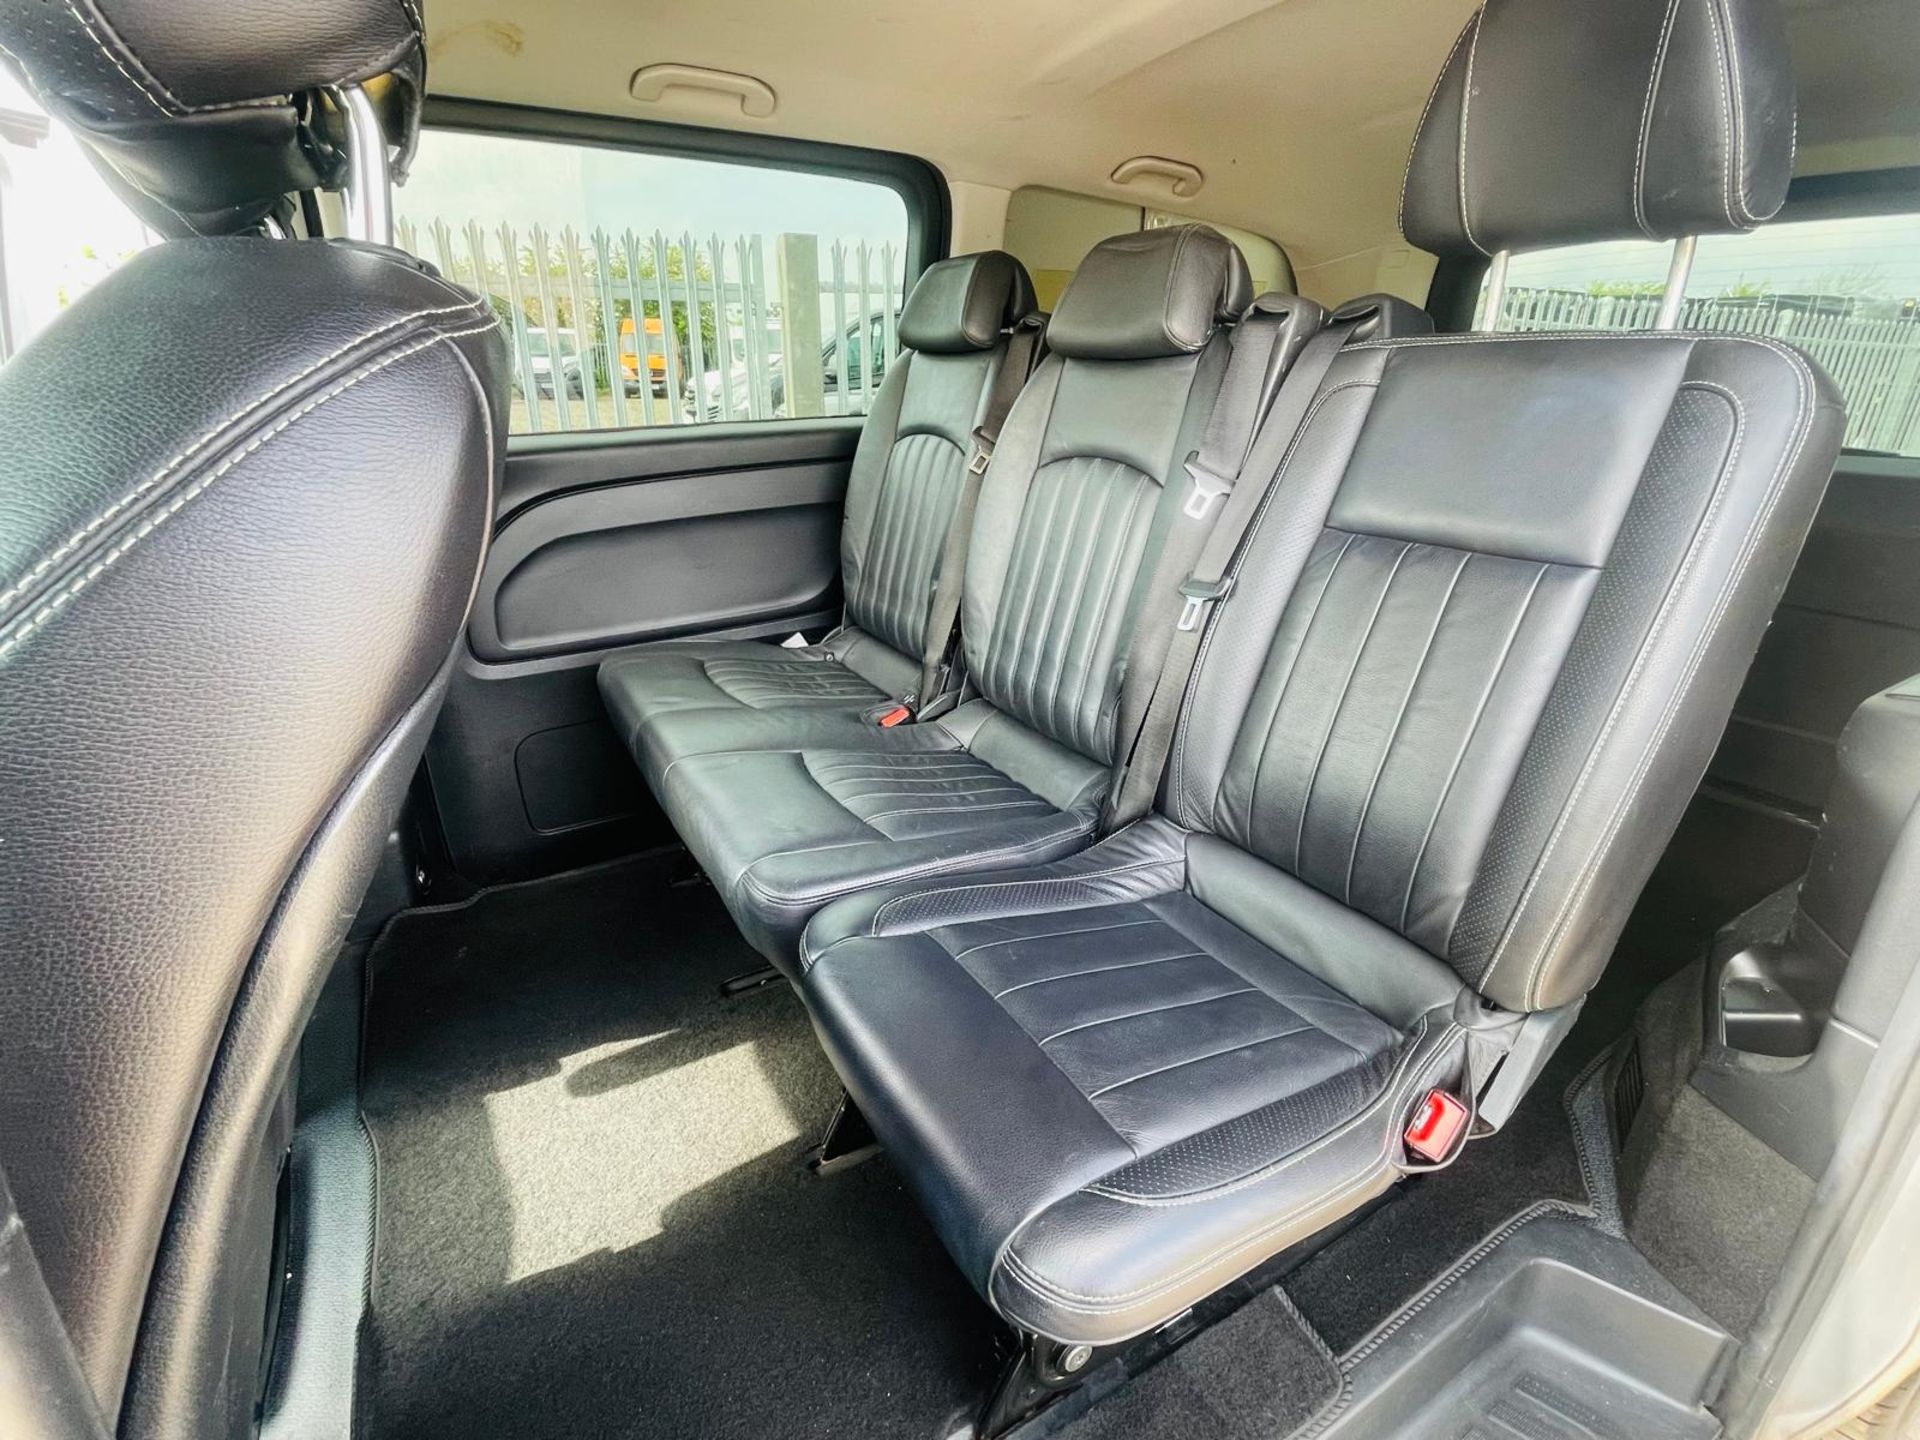 Mercedes-Benz Vito Premium 2.1 119 CDI 7G Tronic Crew Cab LWB Automatic 2019'19 Reg'- Alloy Wheels - Image 28 of 31